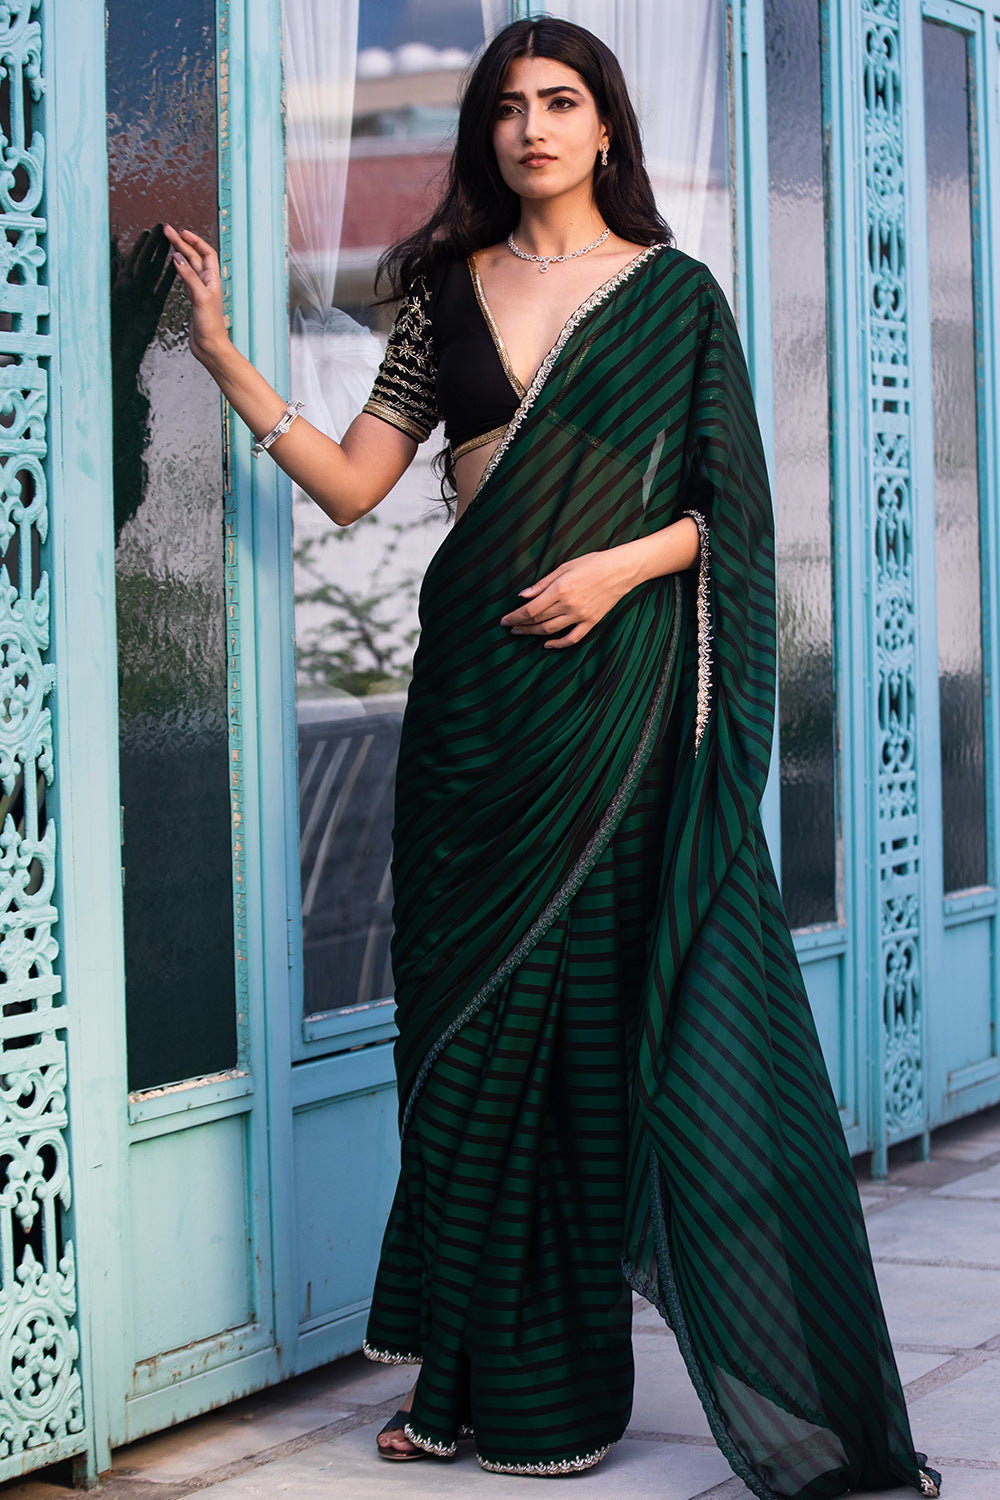 Bottle Green Swarovski Studded Satin Saree – Meena Bazaar